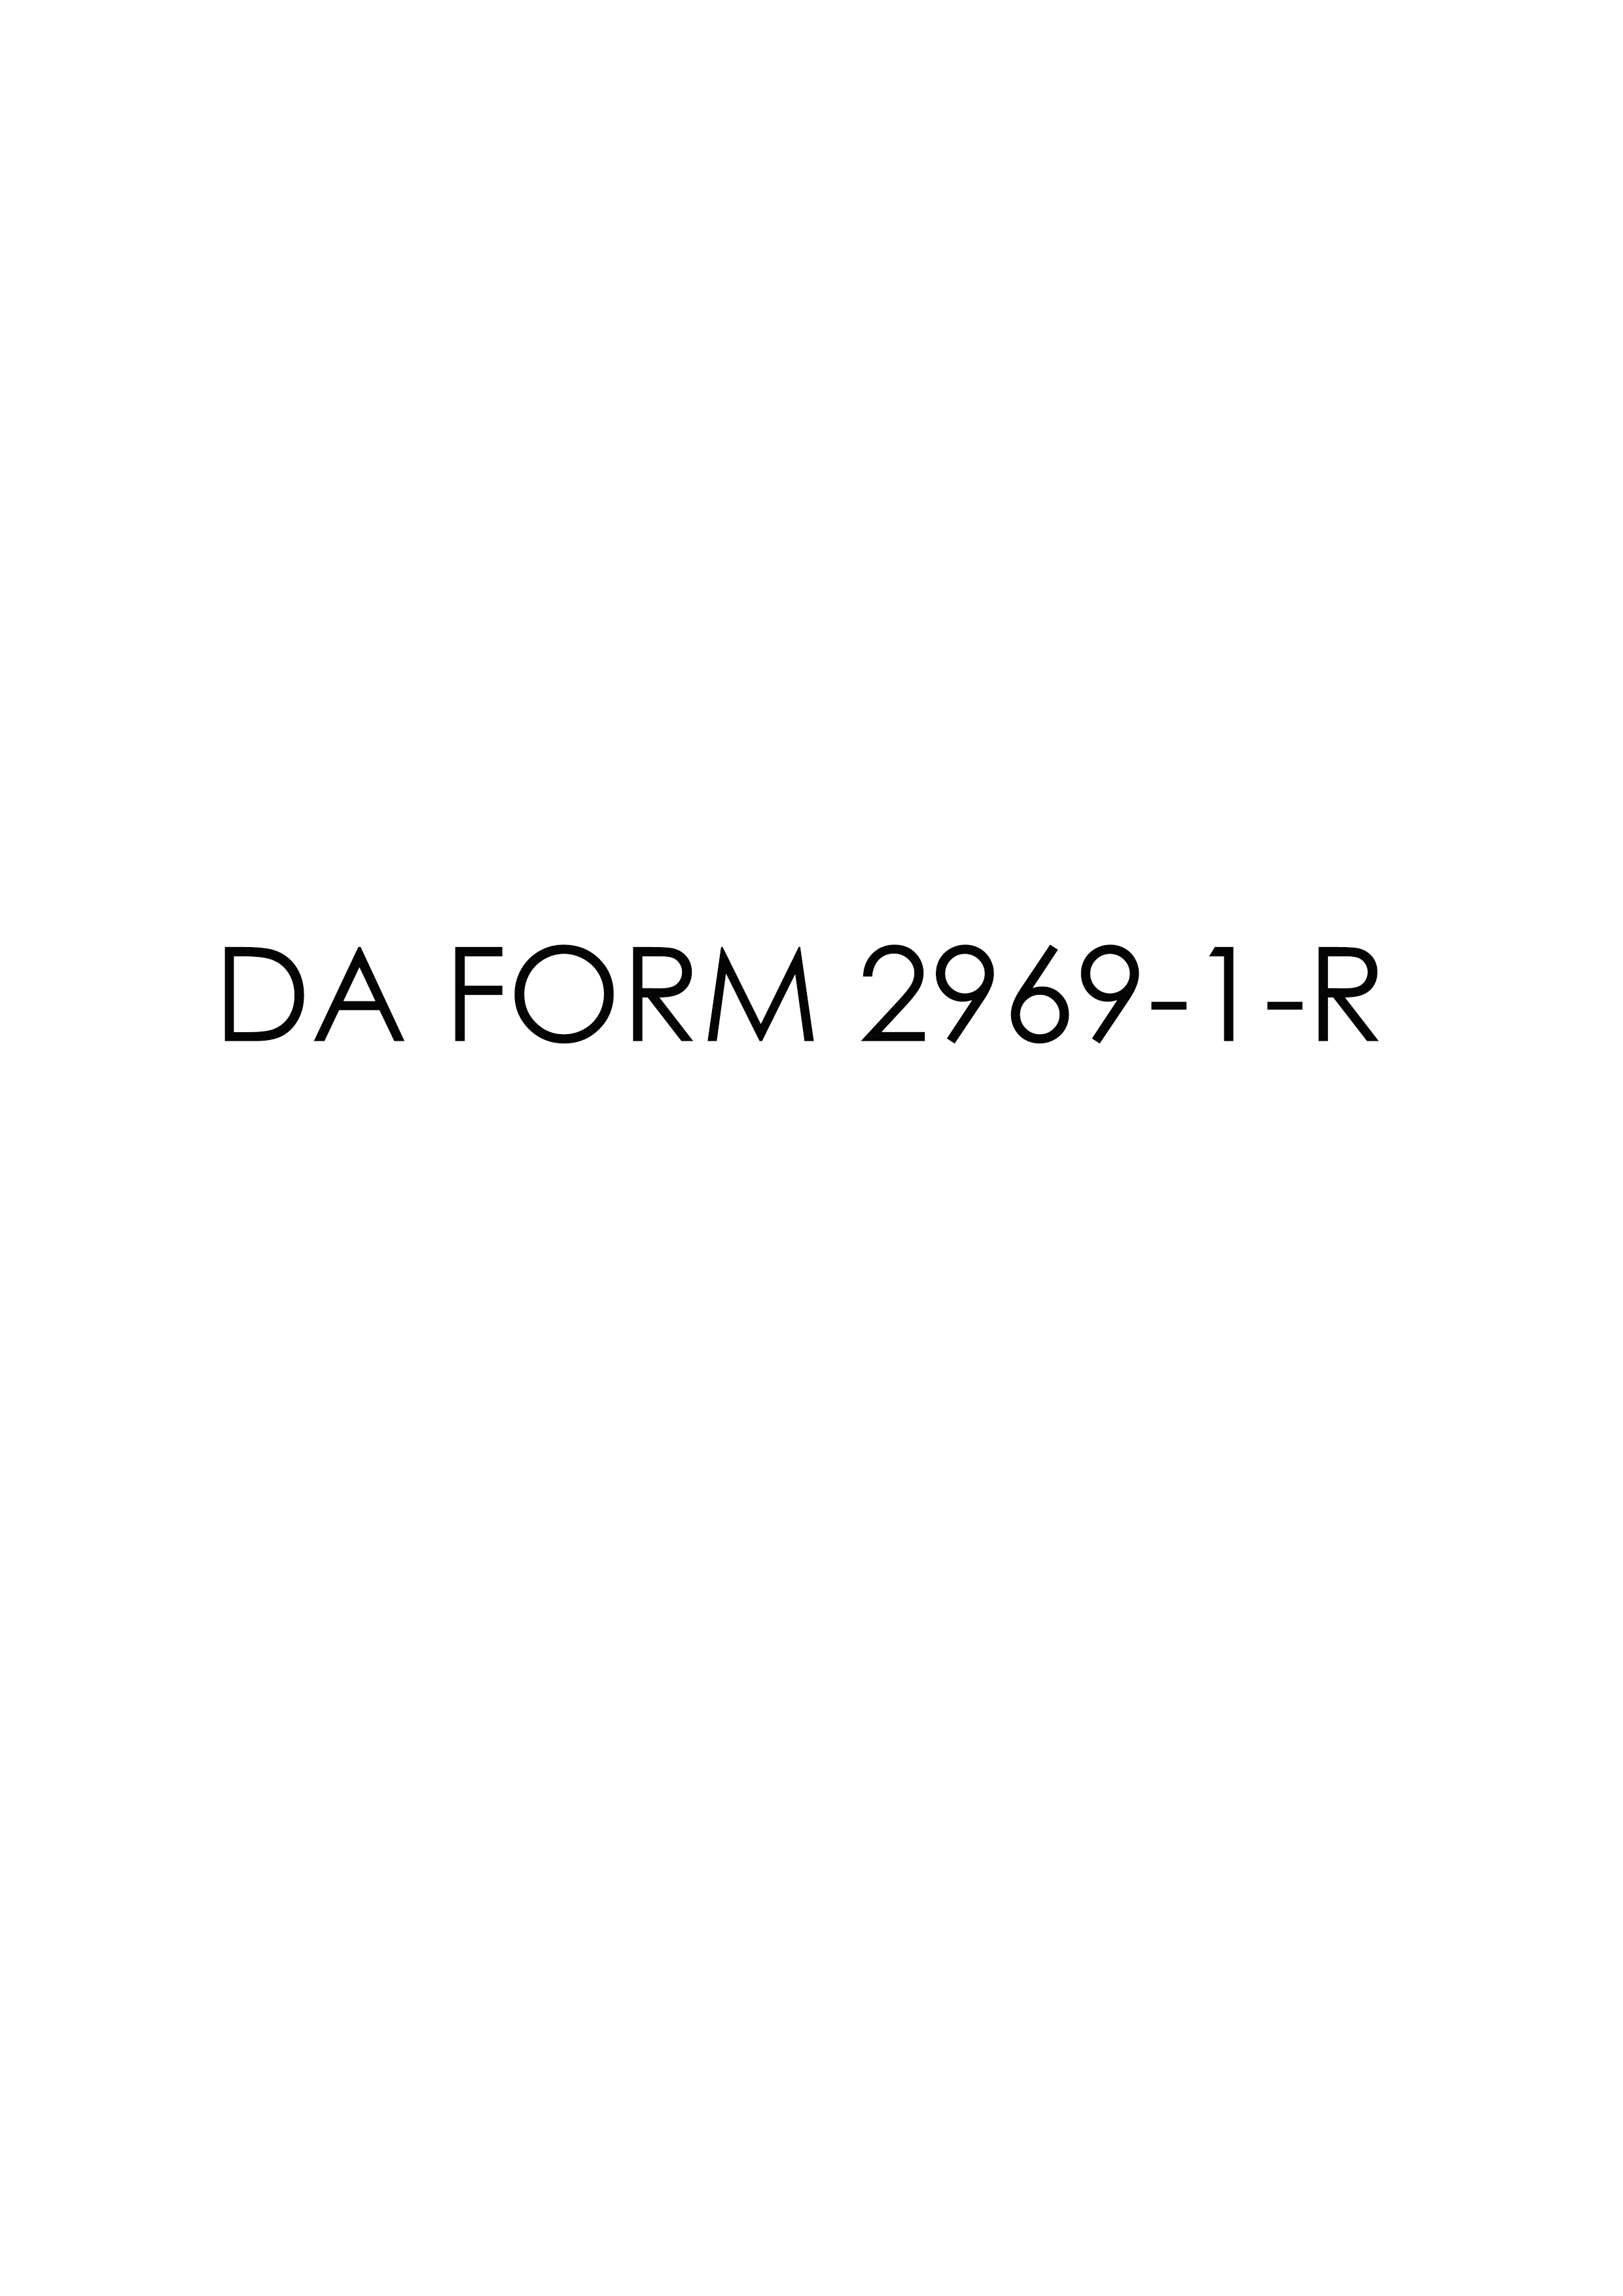 da Form 2969-1-R fillable